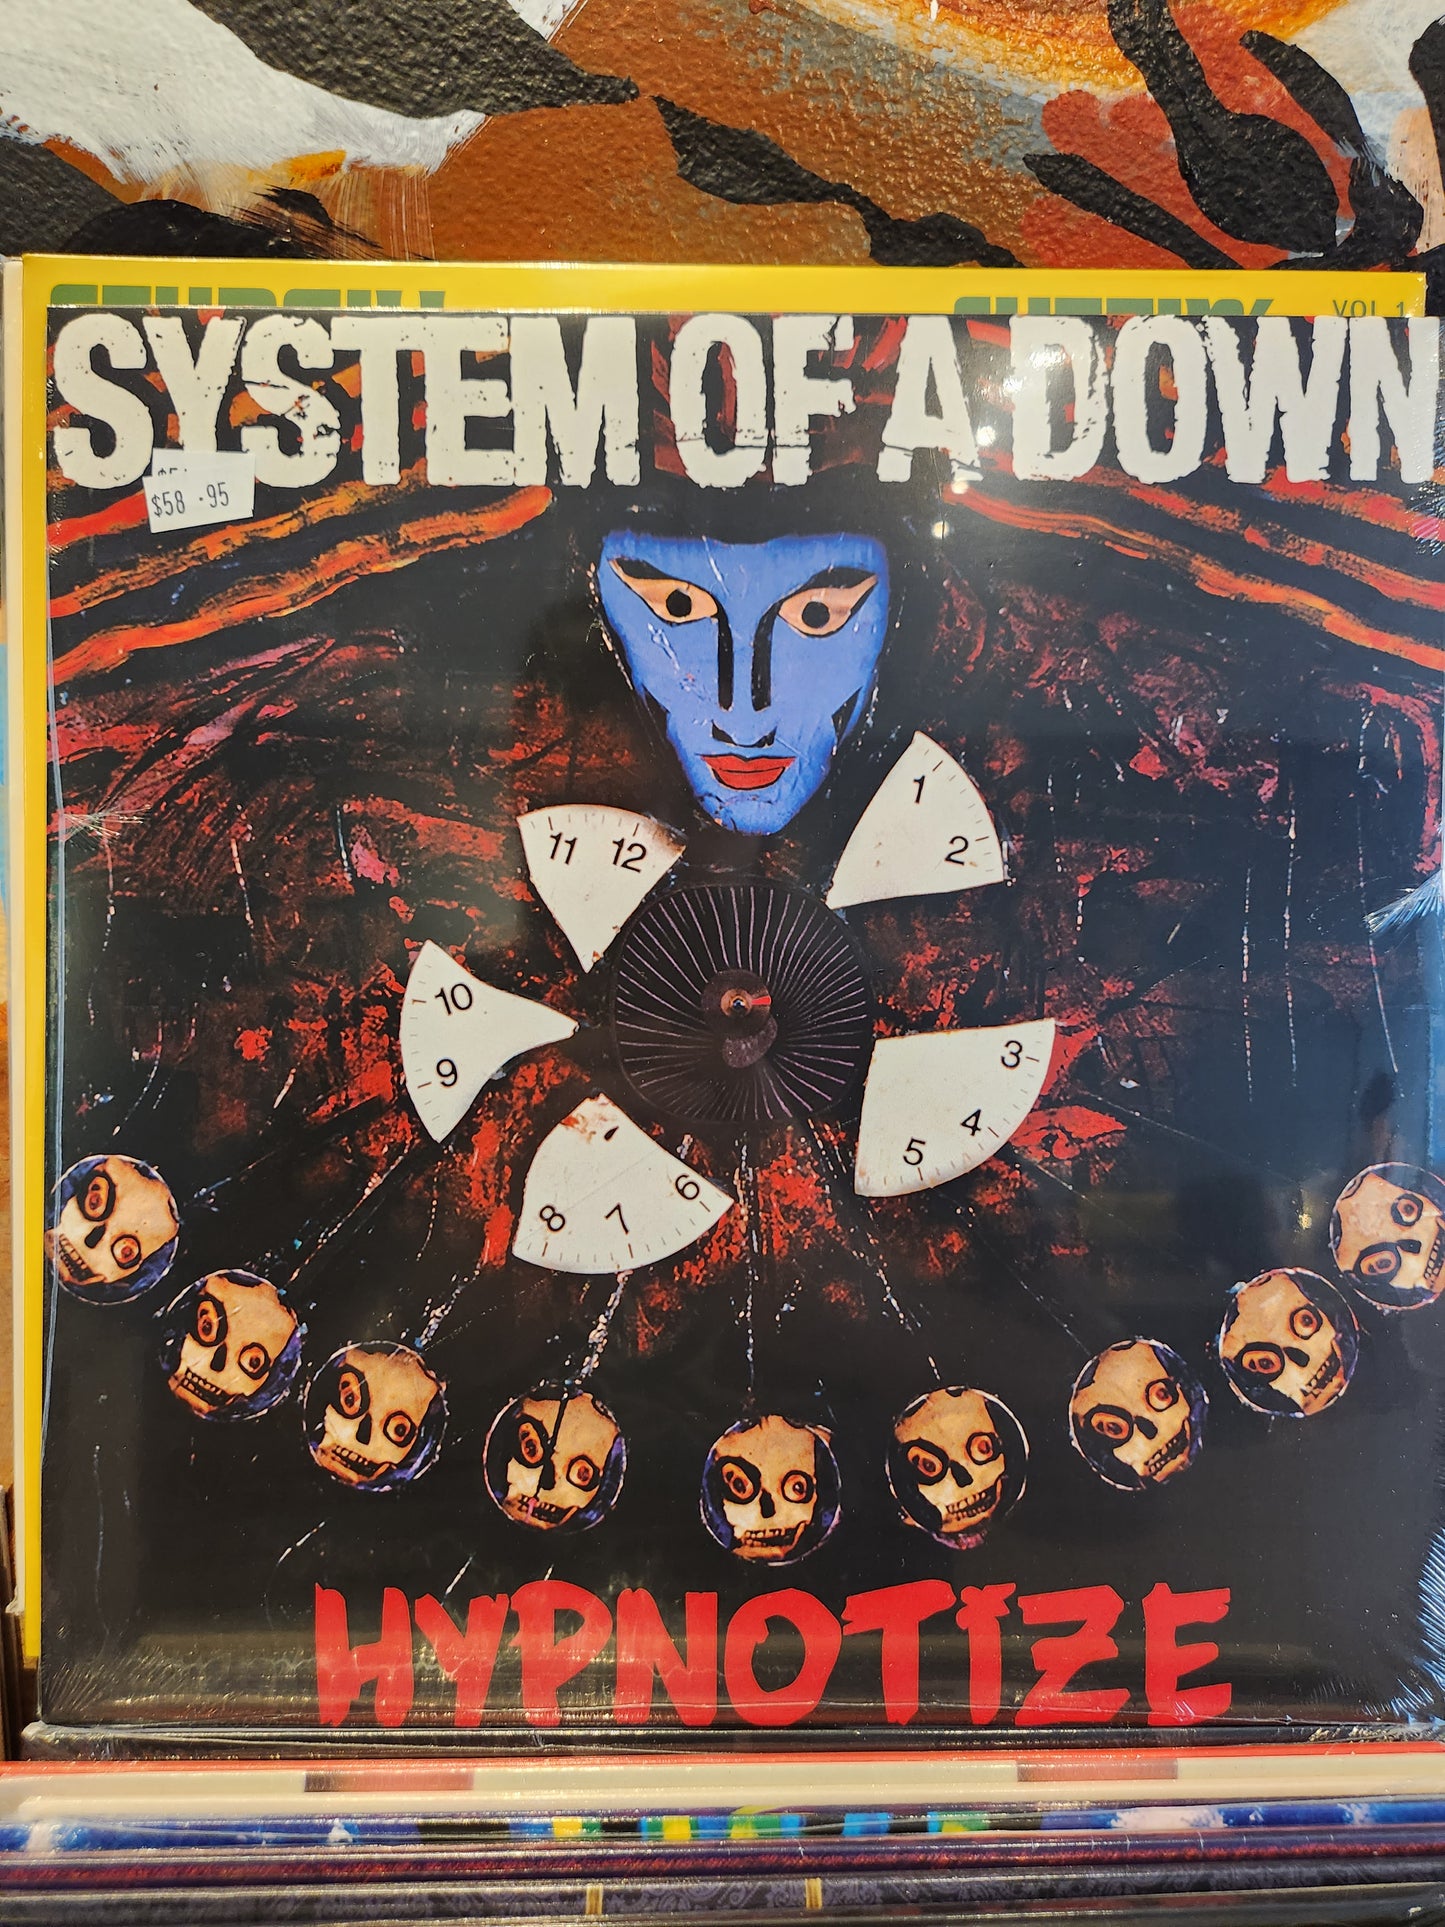 System of a Down - Hypnotize - Vinyl LP